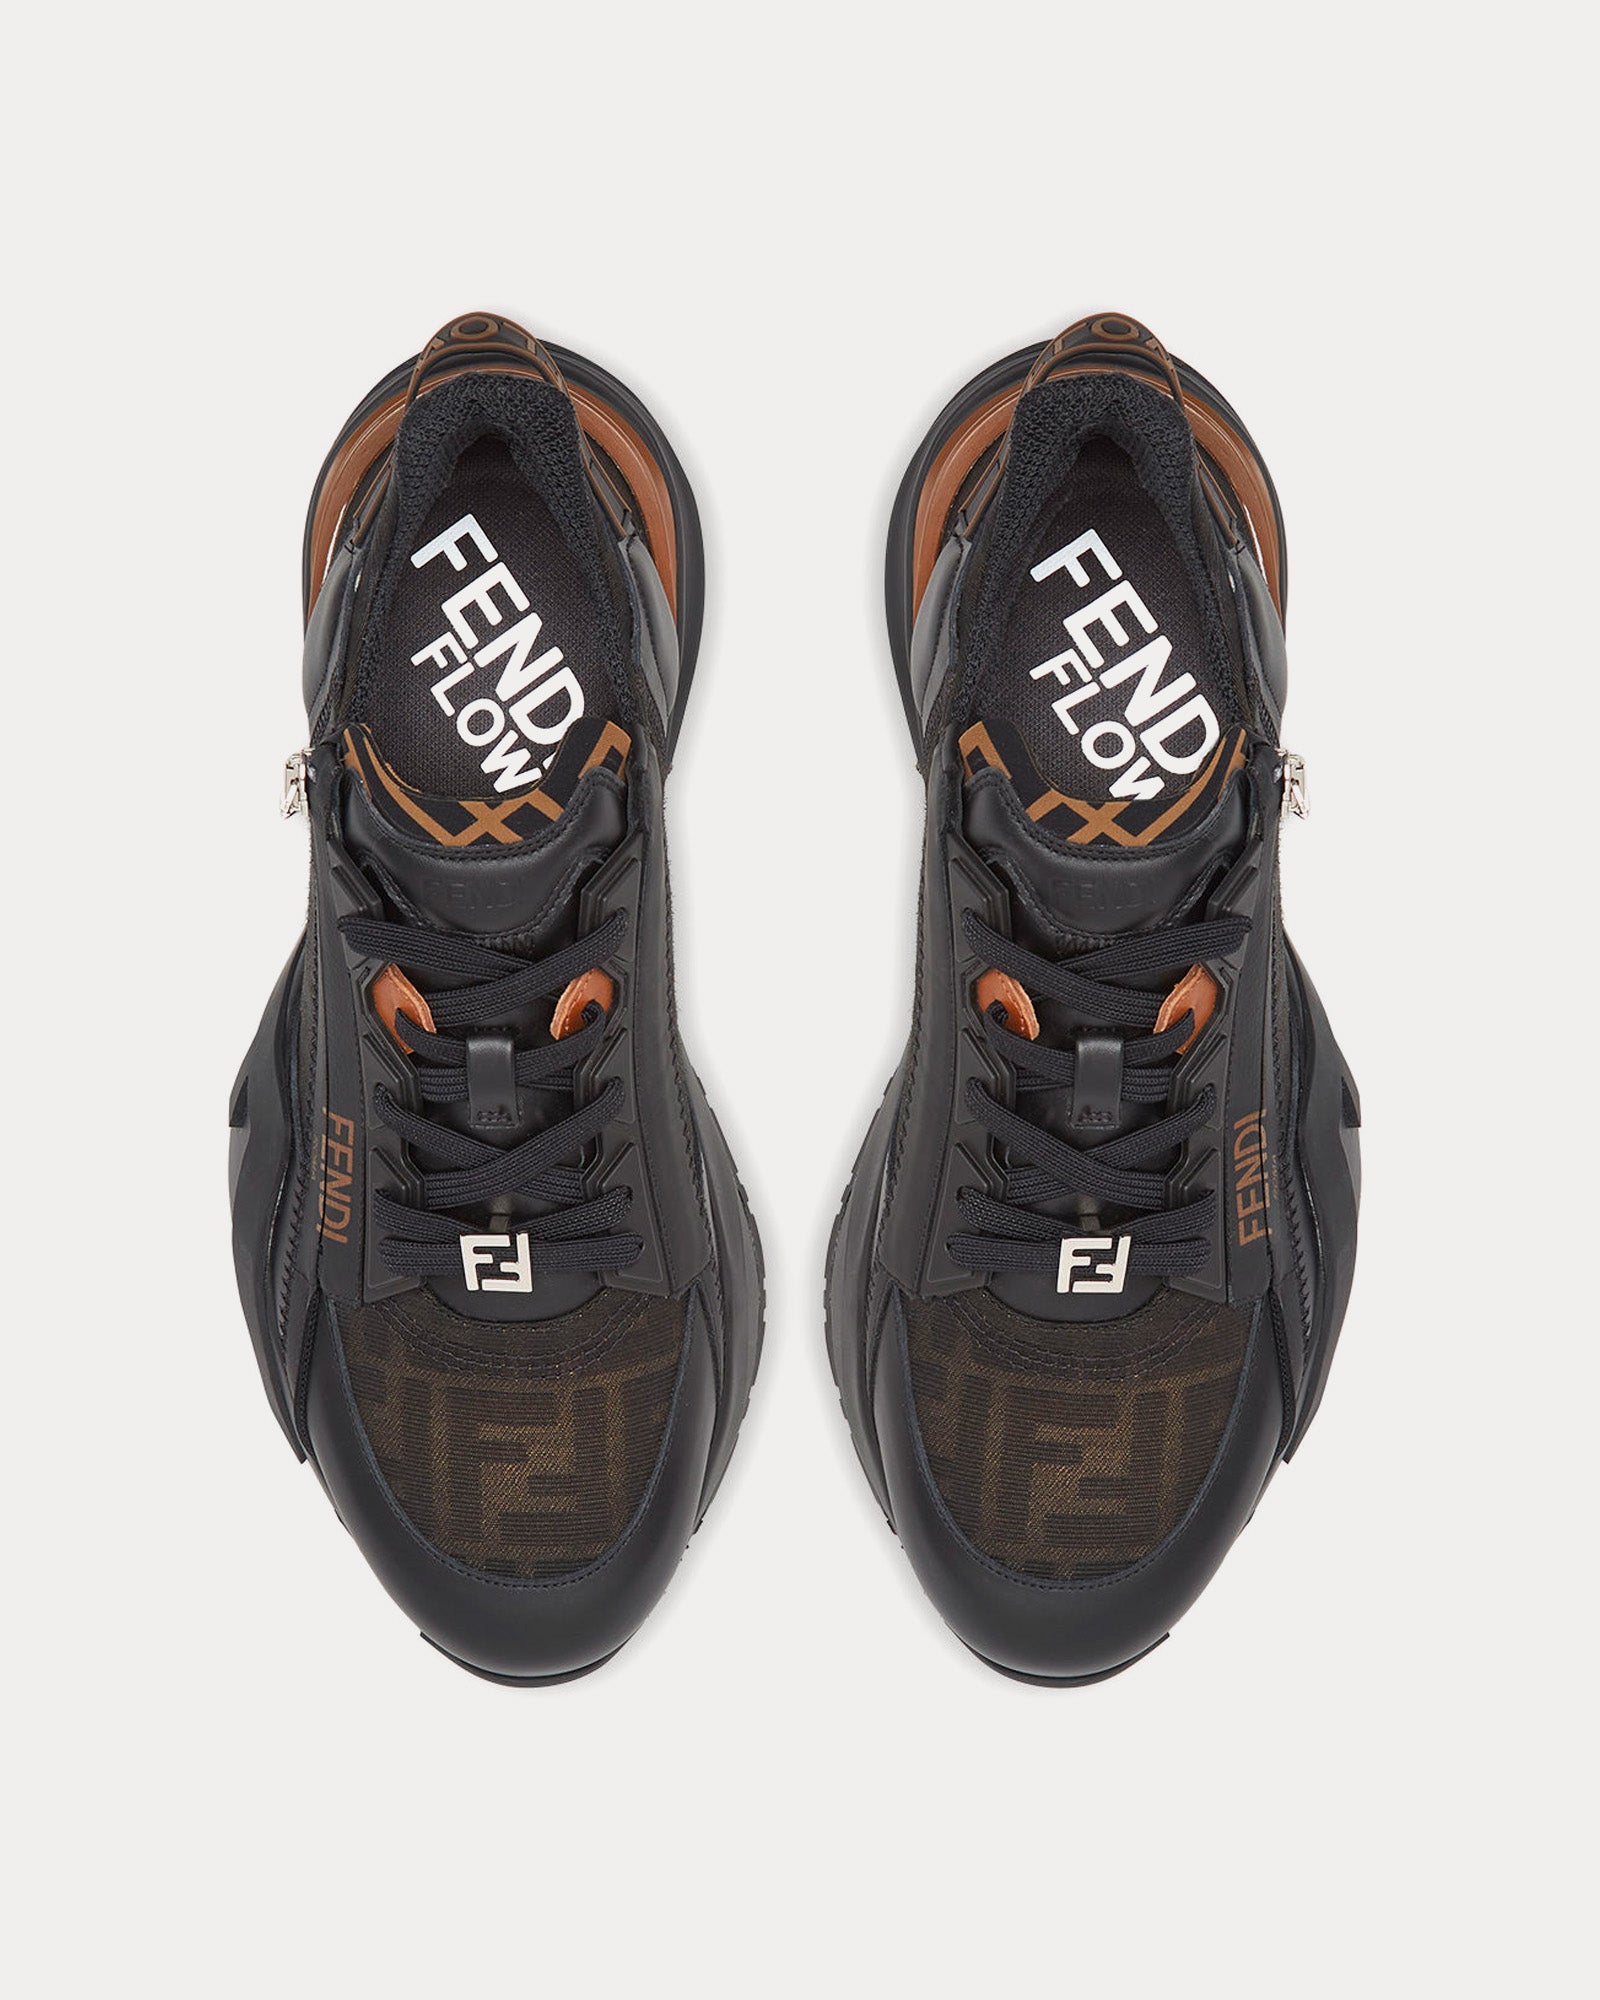 Fendi by Stefano Pilati - Flow Leather Black Low Top Sneakers